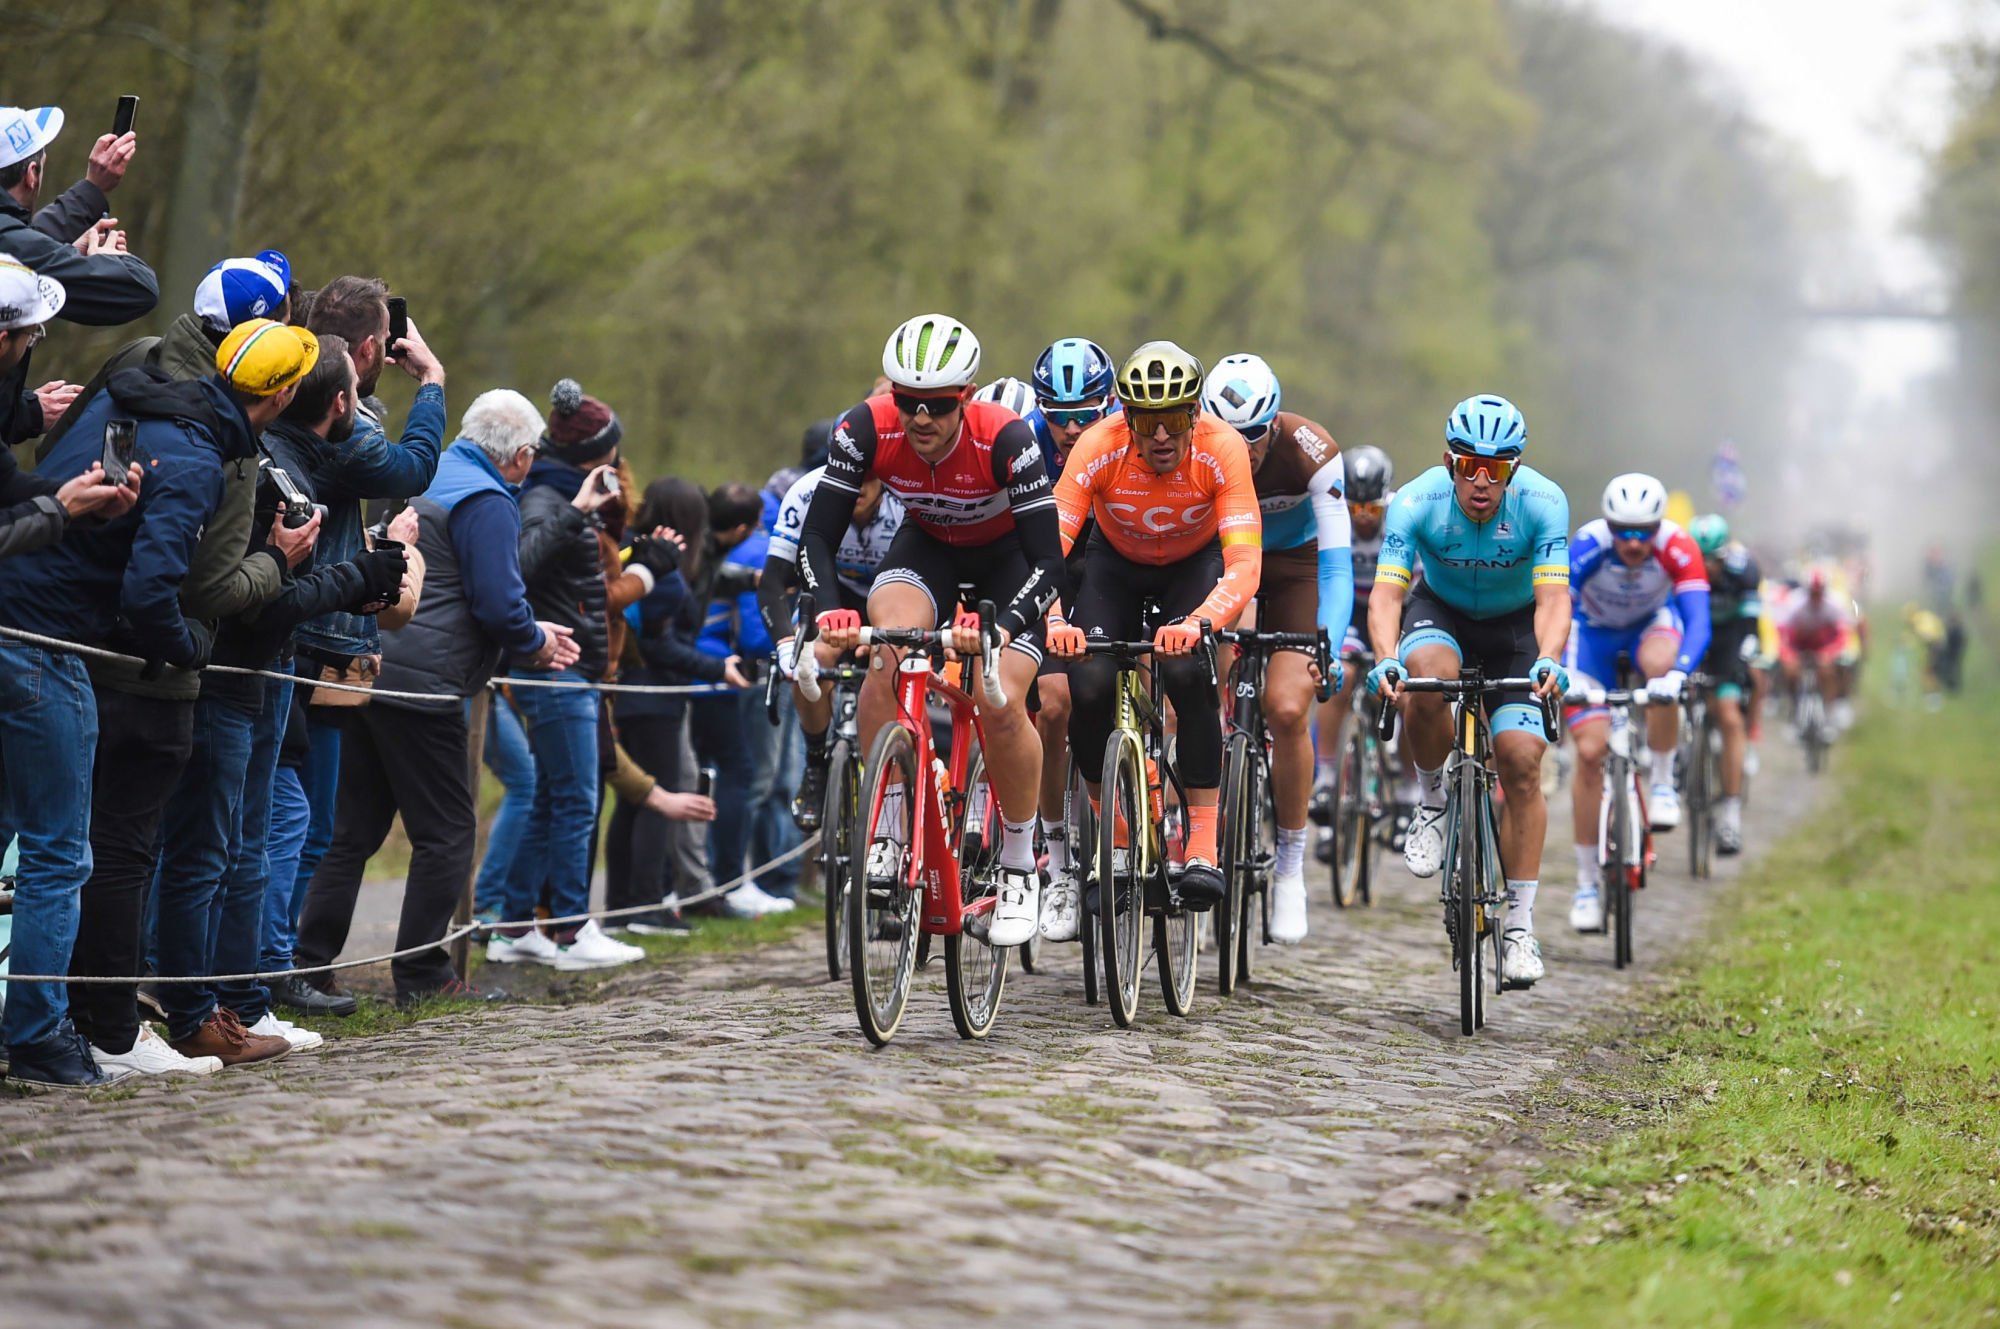 Greg Van Avermaet of CCC during the Paris - Roubaix race in Paris, France on April 14, 2019. 
Photo : Sirotti / Icon Sport